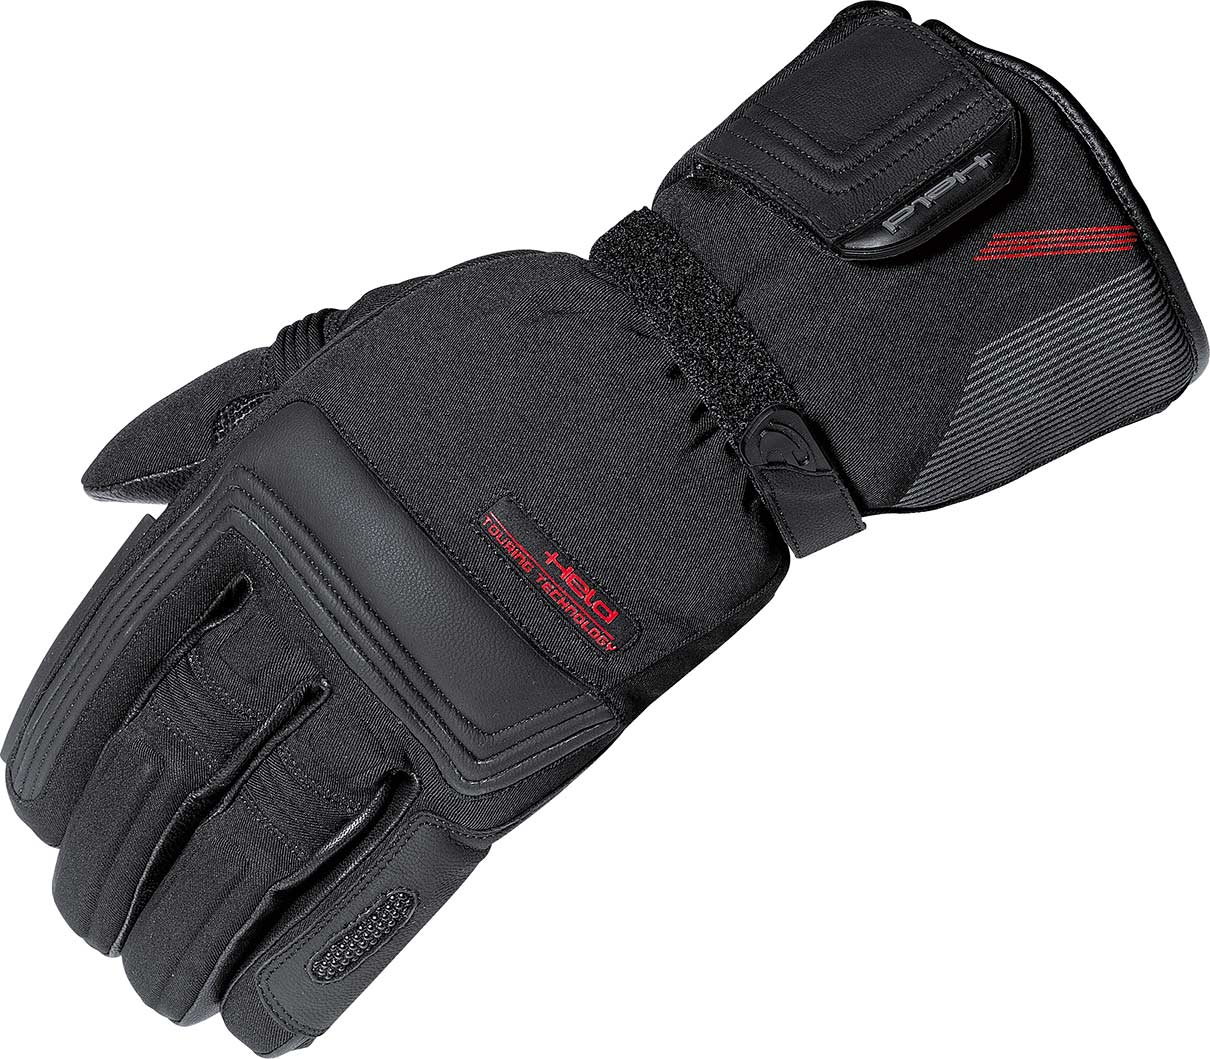 Les gants Held Polar II permettent de lutter contre le froid de l'hiver